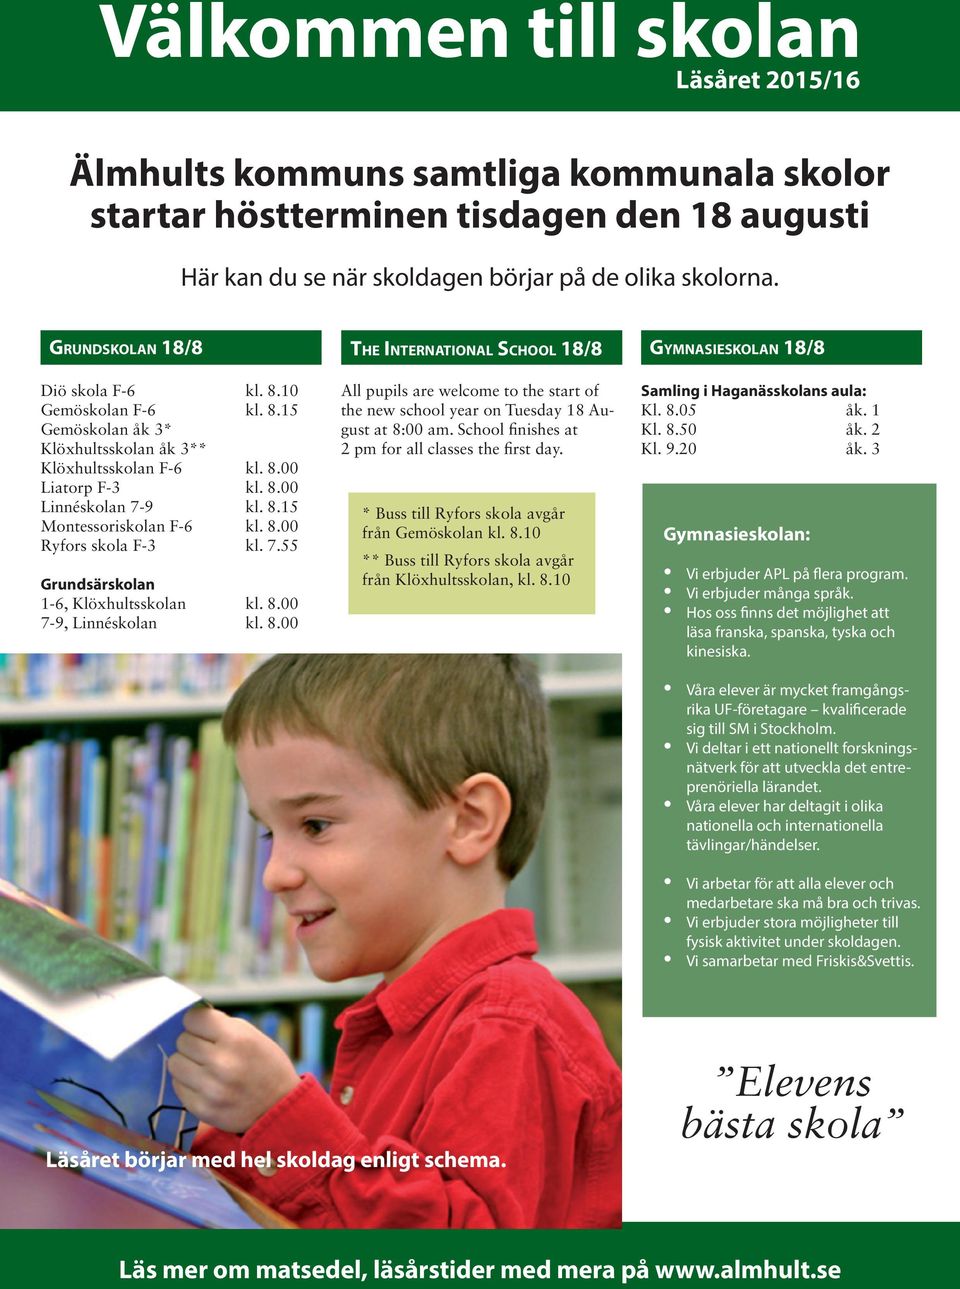 8.00 Linnéskolan 7-9 kl. 8.15 Montessoriskolan F-6 kl. 8.00 Ryfors skola F-3 kl. 7.55 Grundsärskolan 1-6, Klöxhultsskolan kl. 8.00 7-9, Linnéskolan kl. 8.00 All pupils are welcome to the start of the new school year on Tuesday 18 August at 8:00 am.